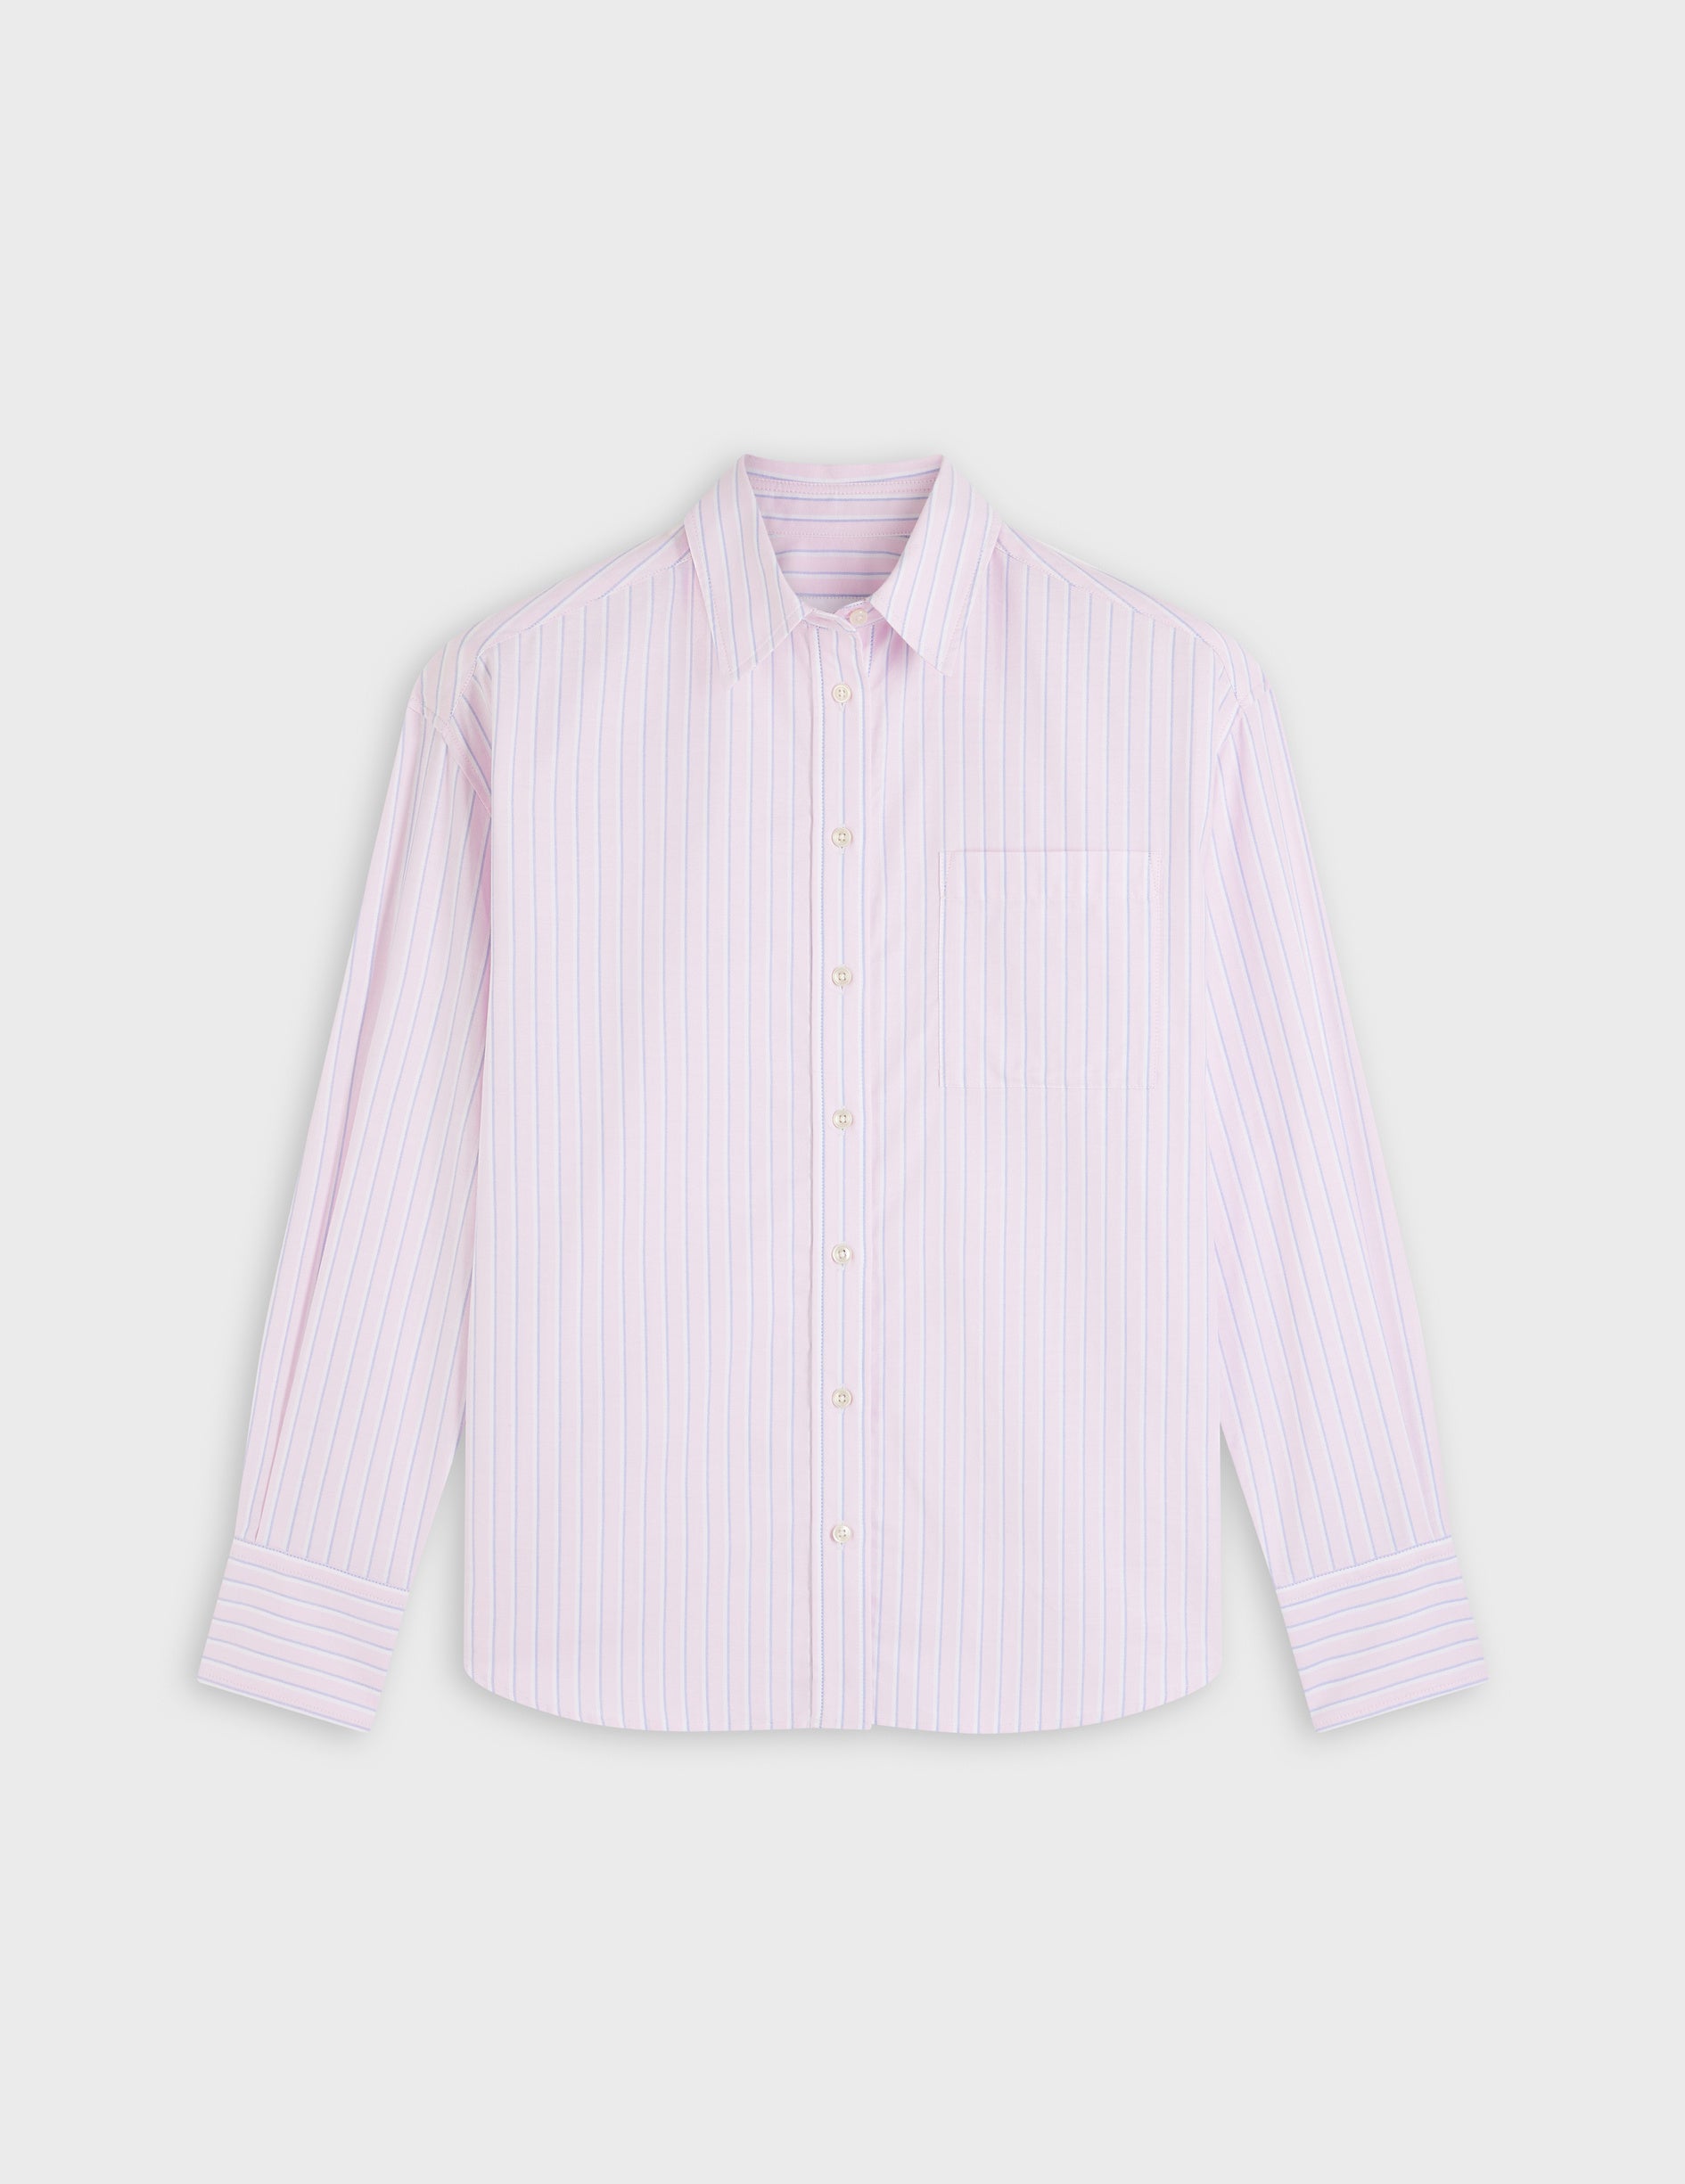 Striped pink Charlotte shirt